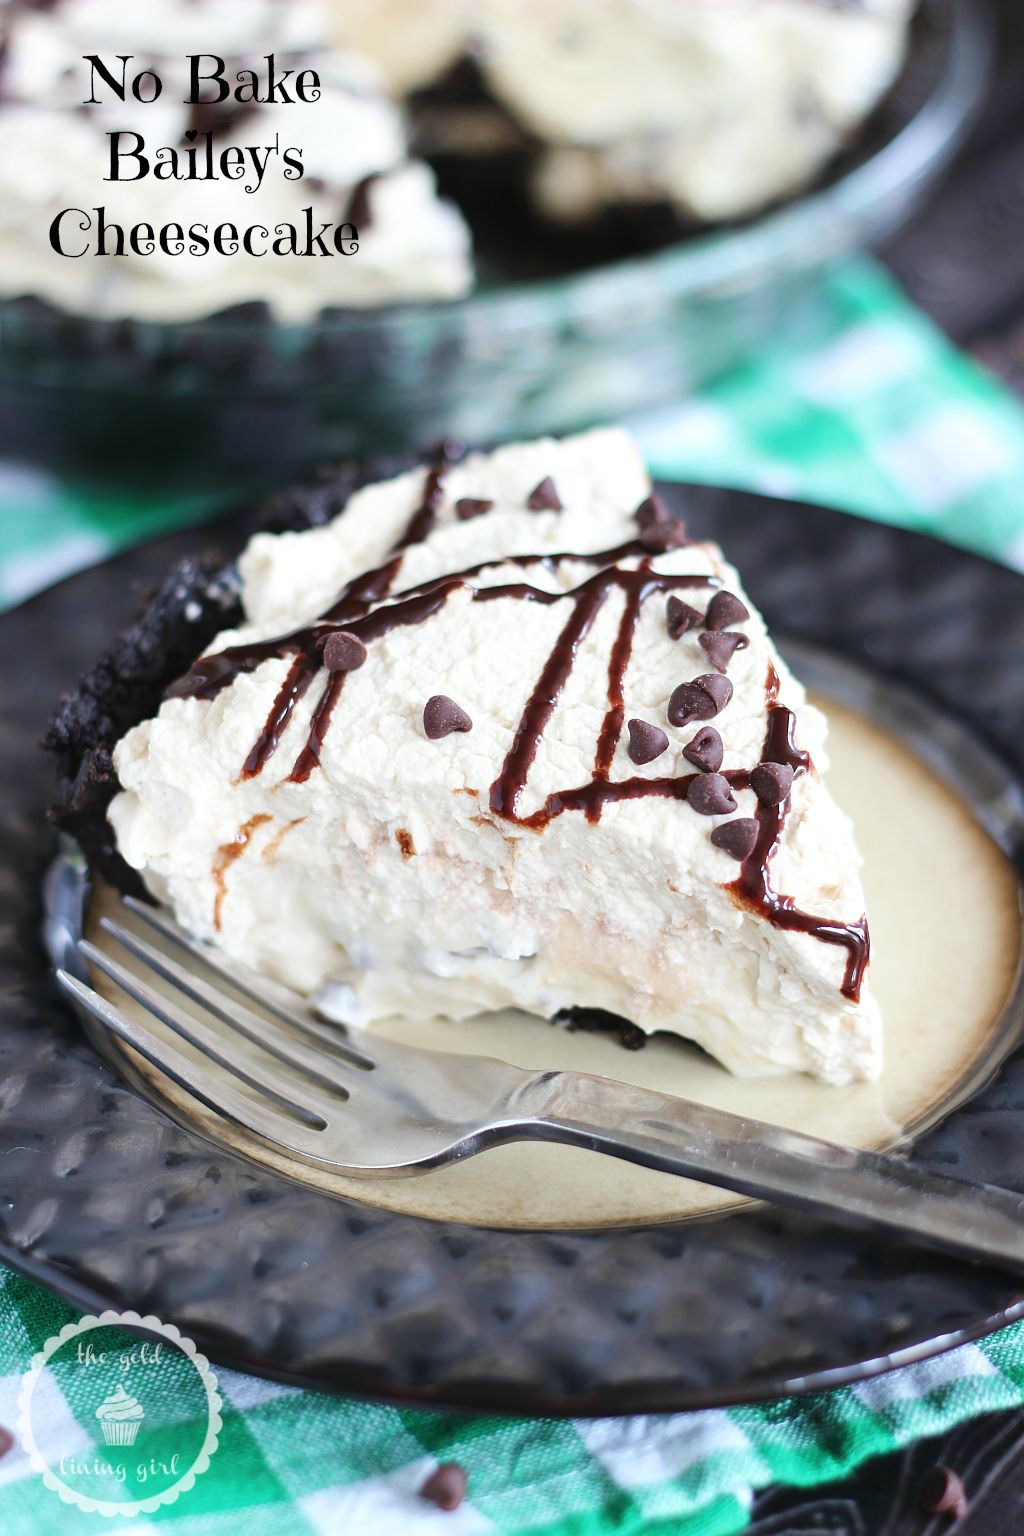 Hazelnut & Baileys meringue cake recipe | BBC Good Food